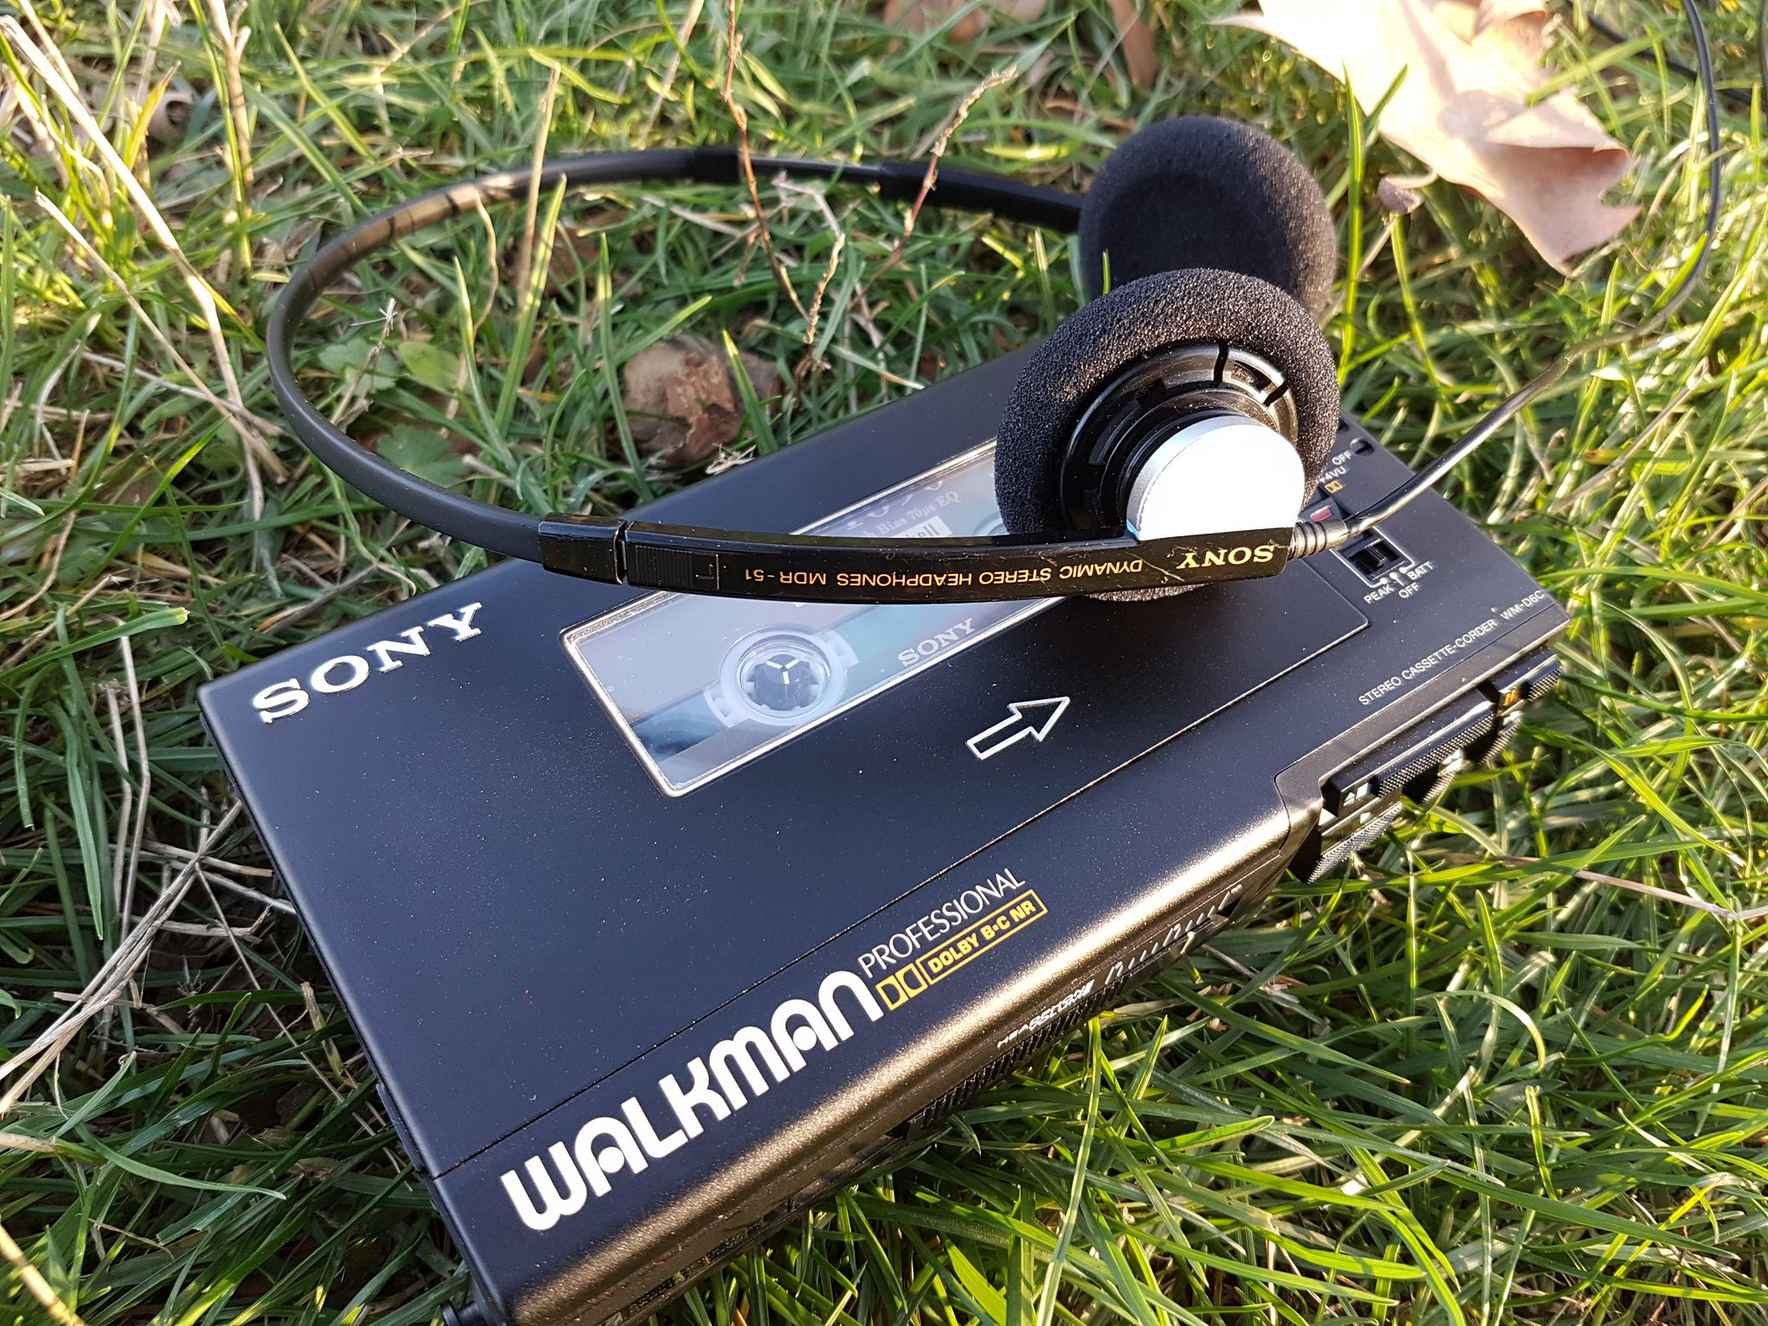 Sony Walkman celebrates its 45th anniversary